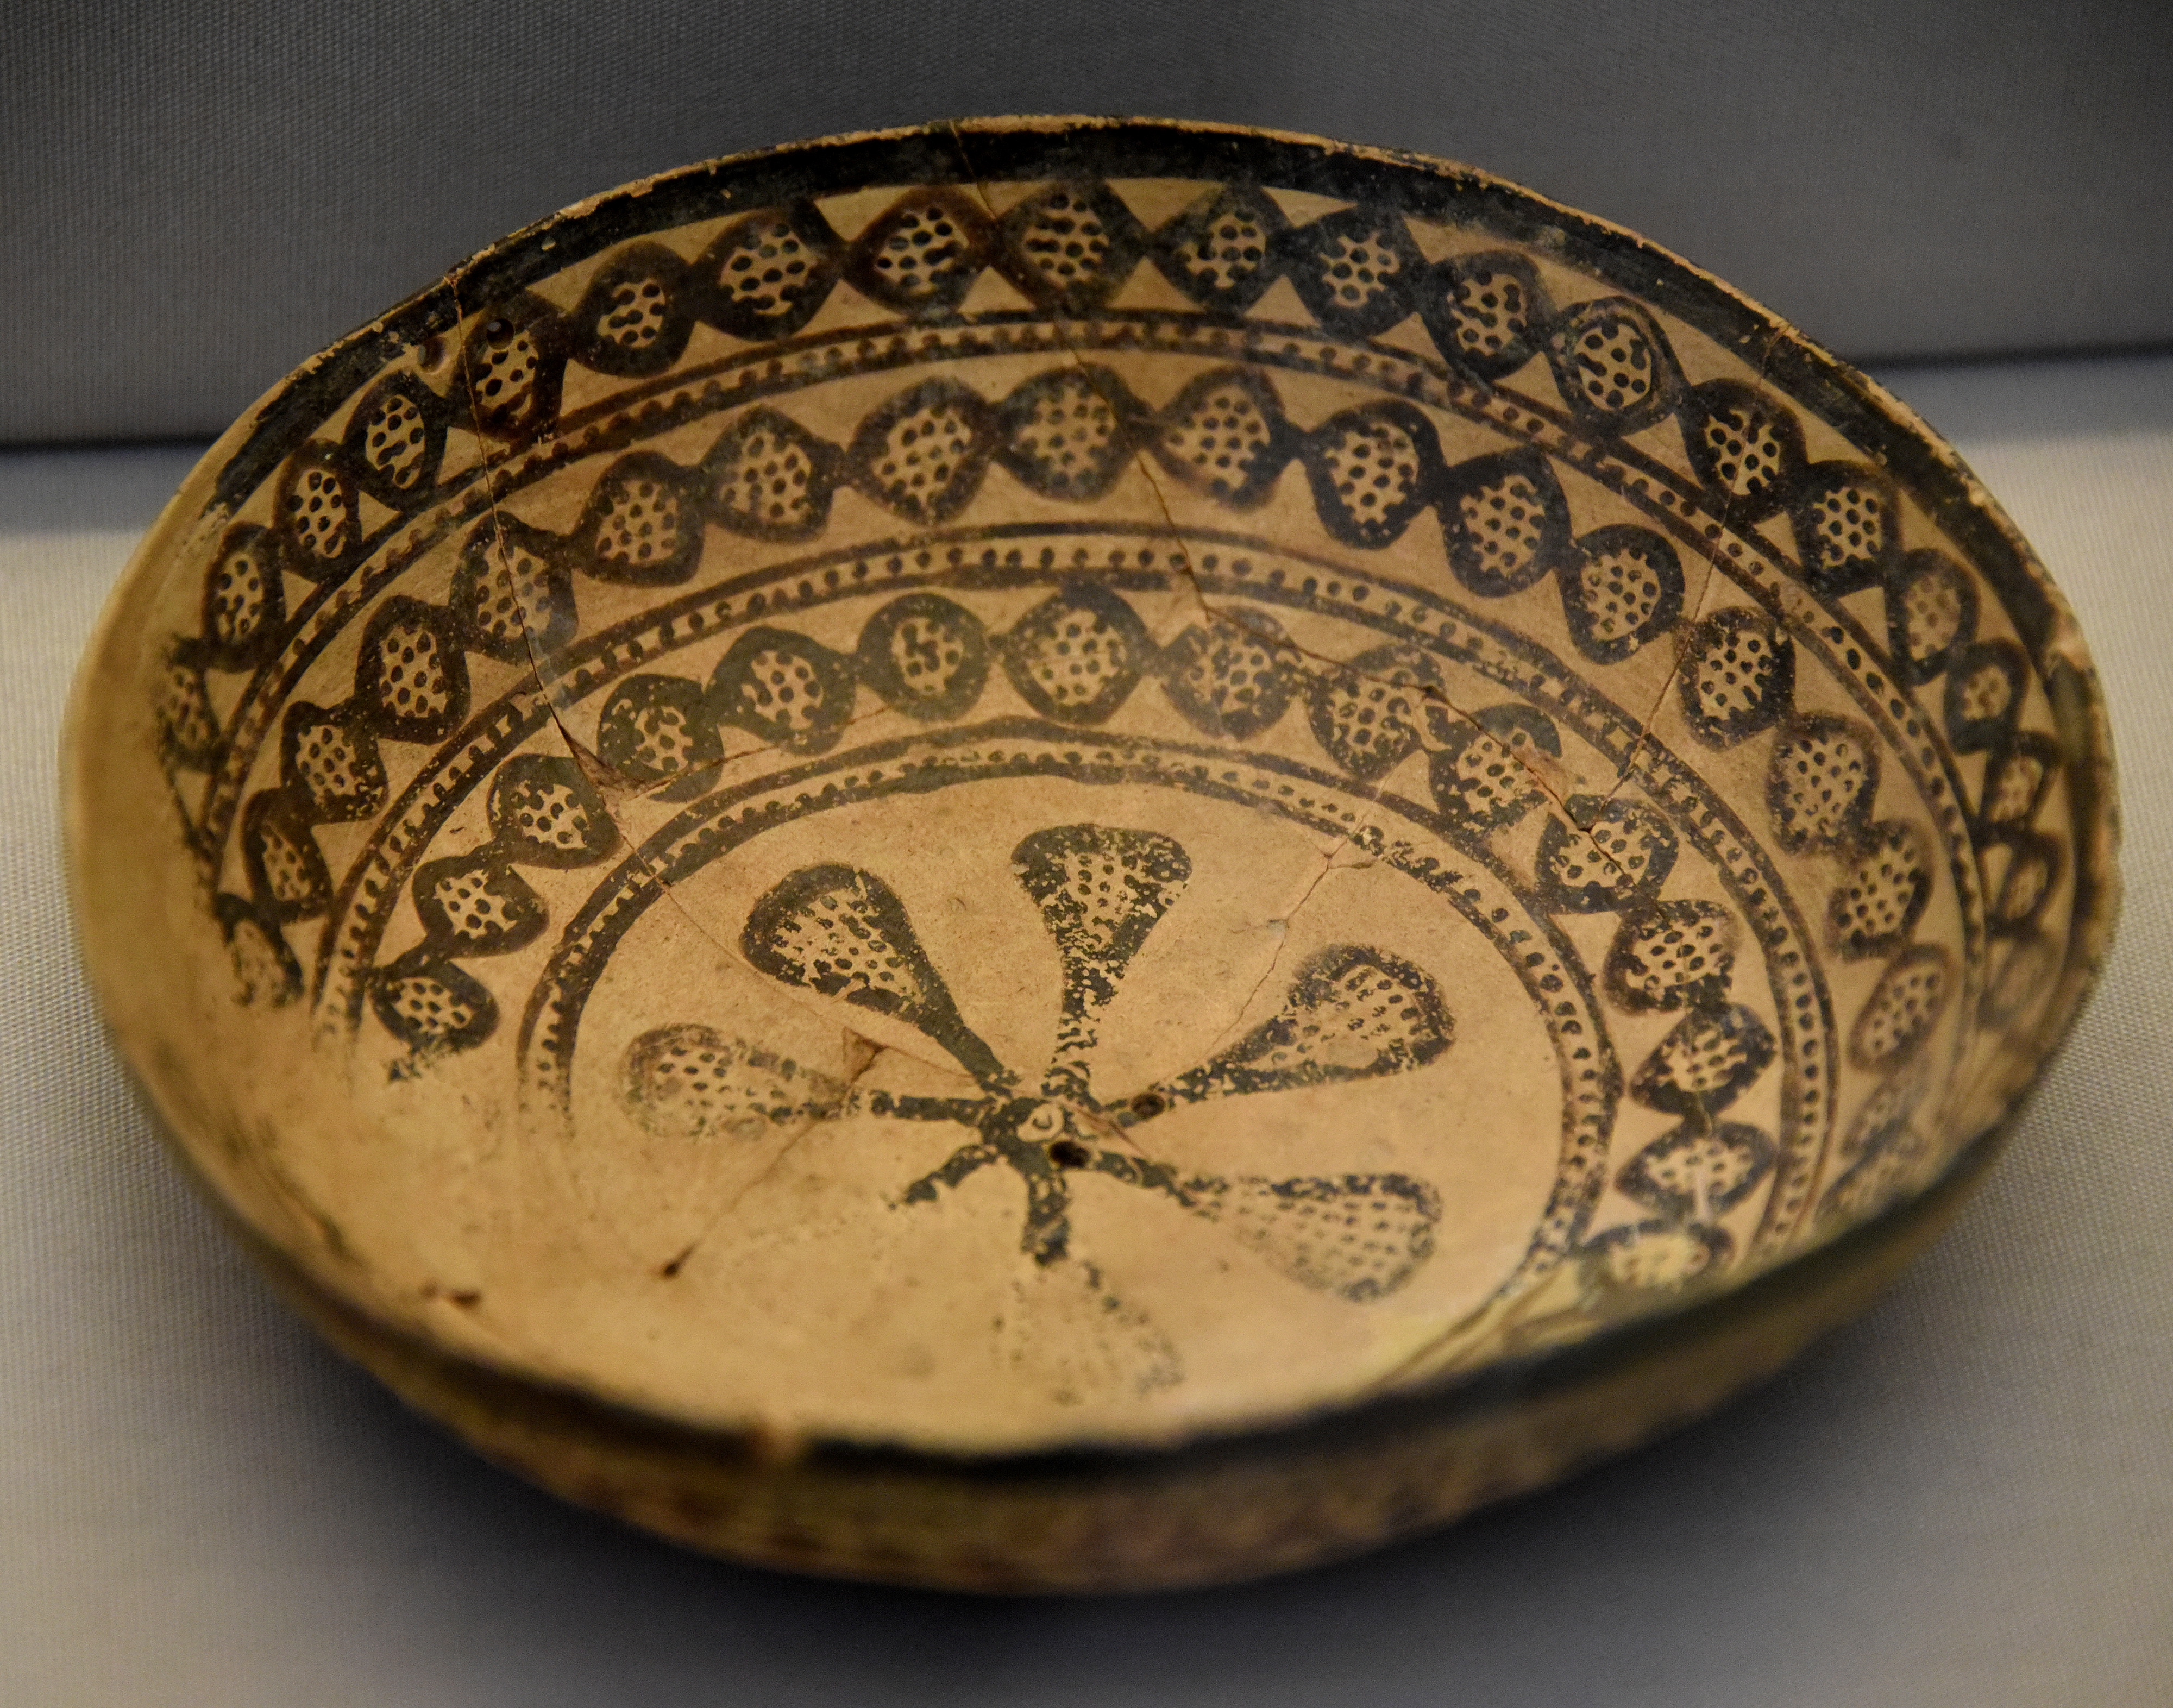 Late Halaf Pottery Bowl (Illustration) - Ancient History Encyclopedia